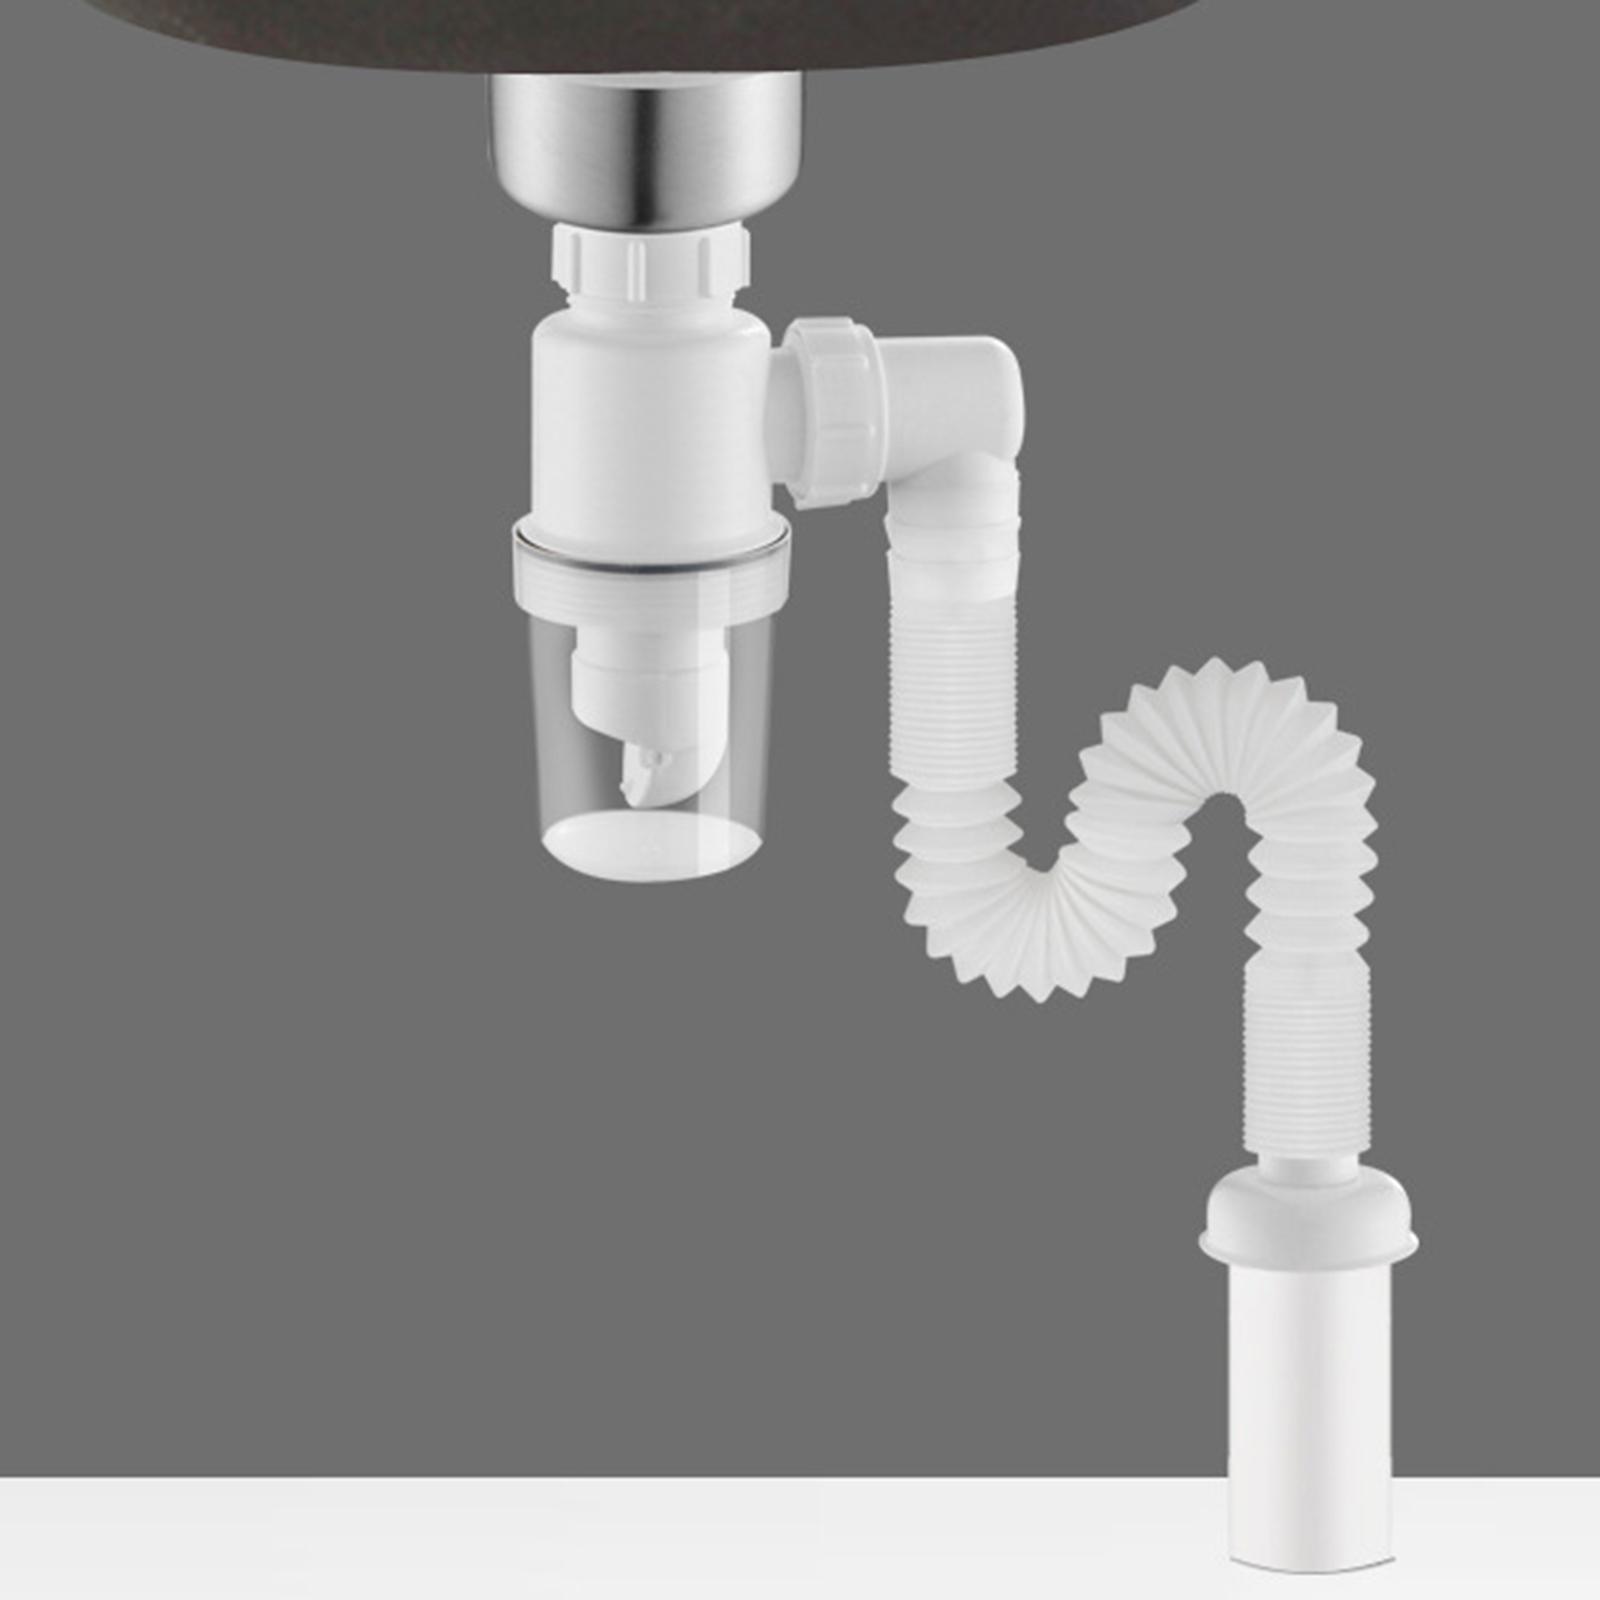 Universal Sink Drain Pipe Flexible for Bathroom Wash Basin Sink